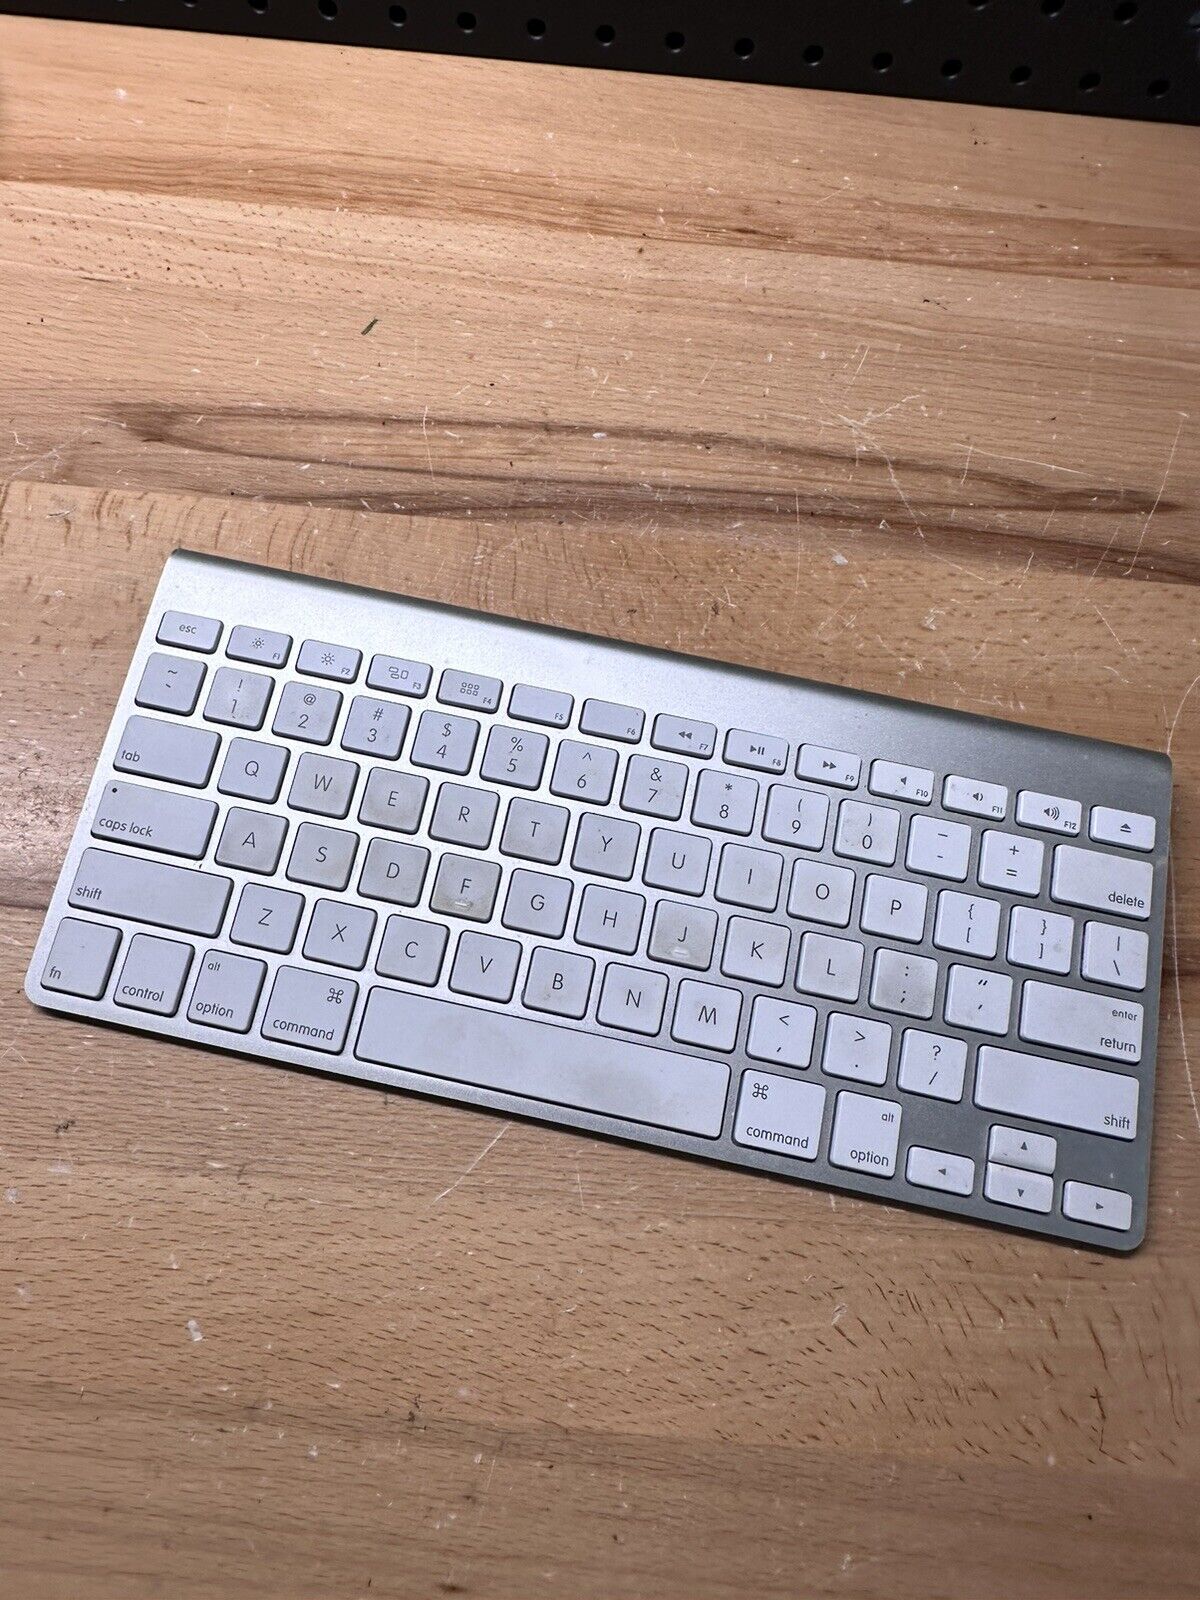 (L) Apple A1314 Wireless Keyboard with Bluetooth for iMac / Mac / iPad